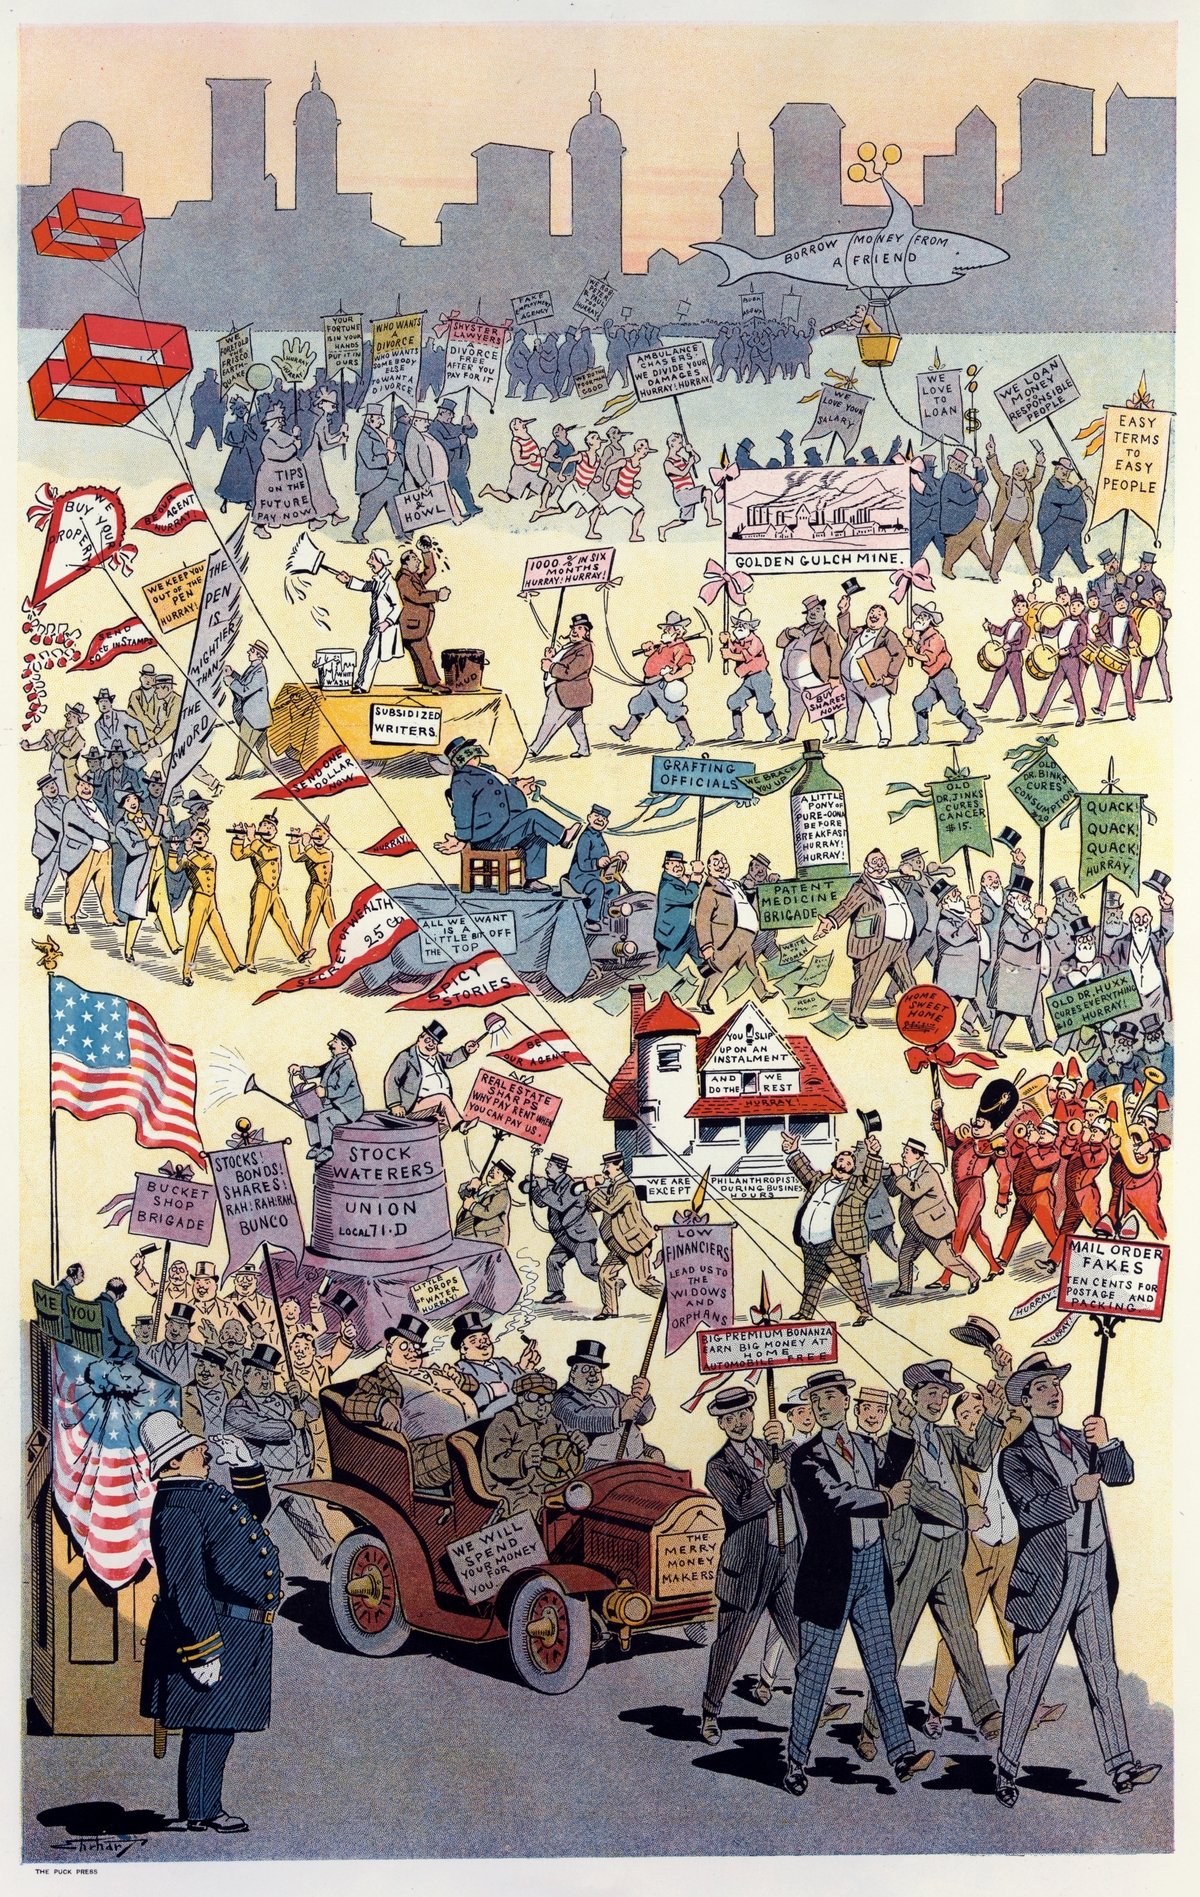 Labor day (1909)